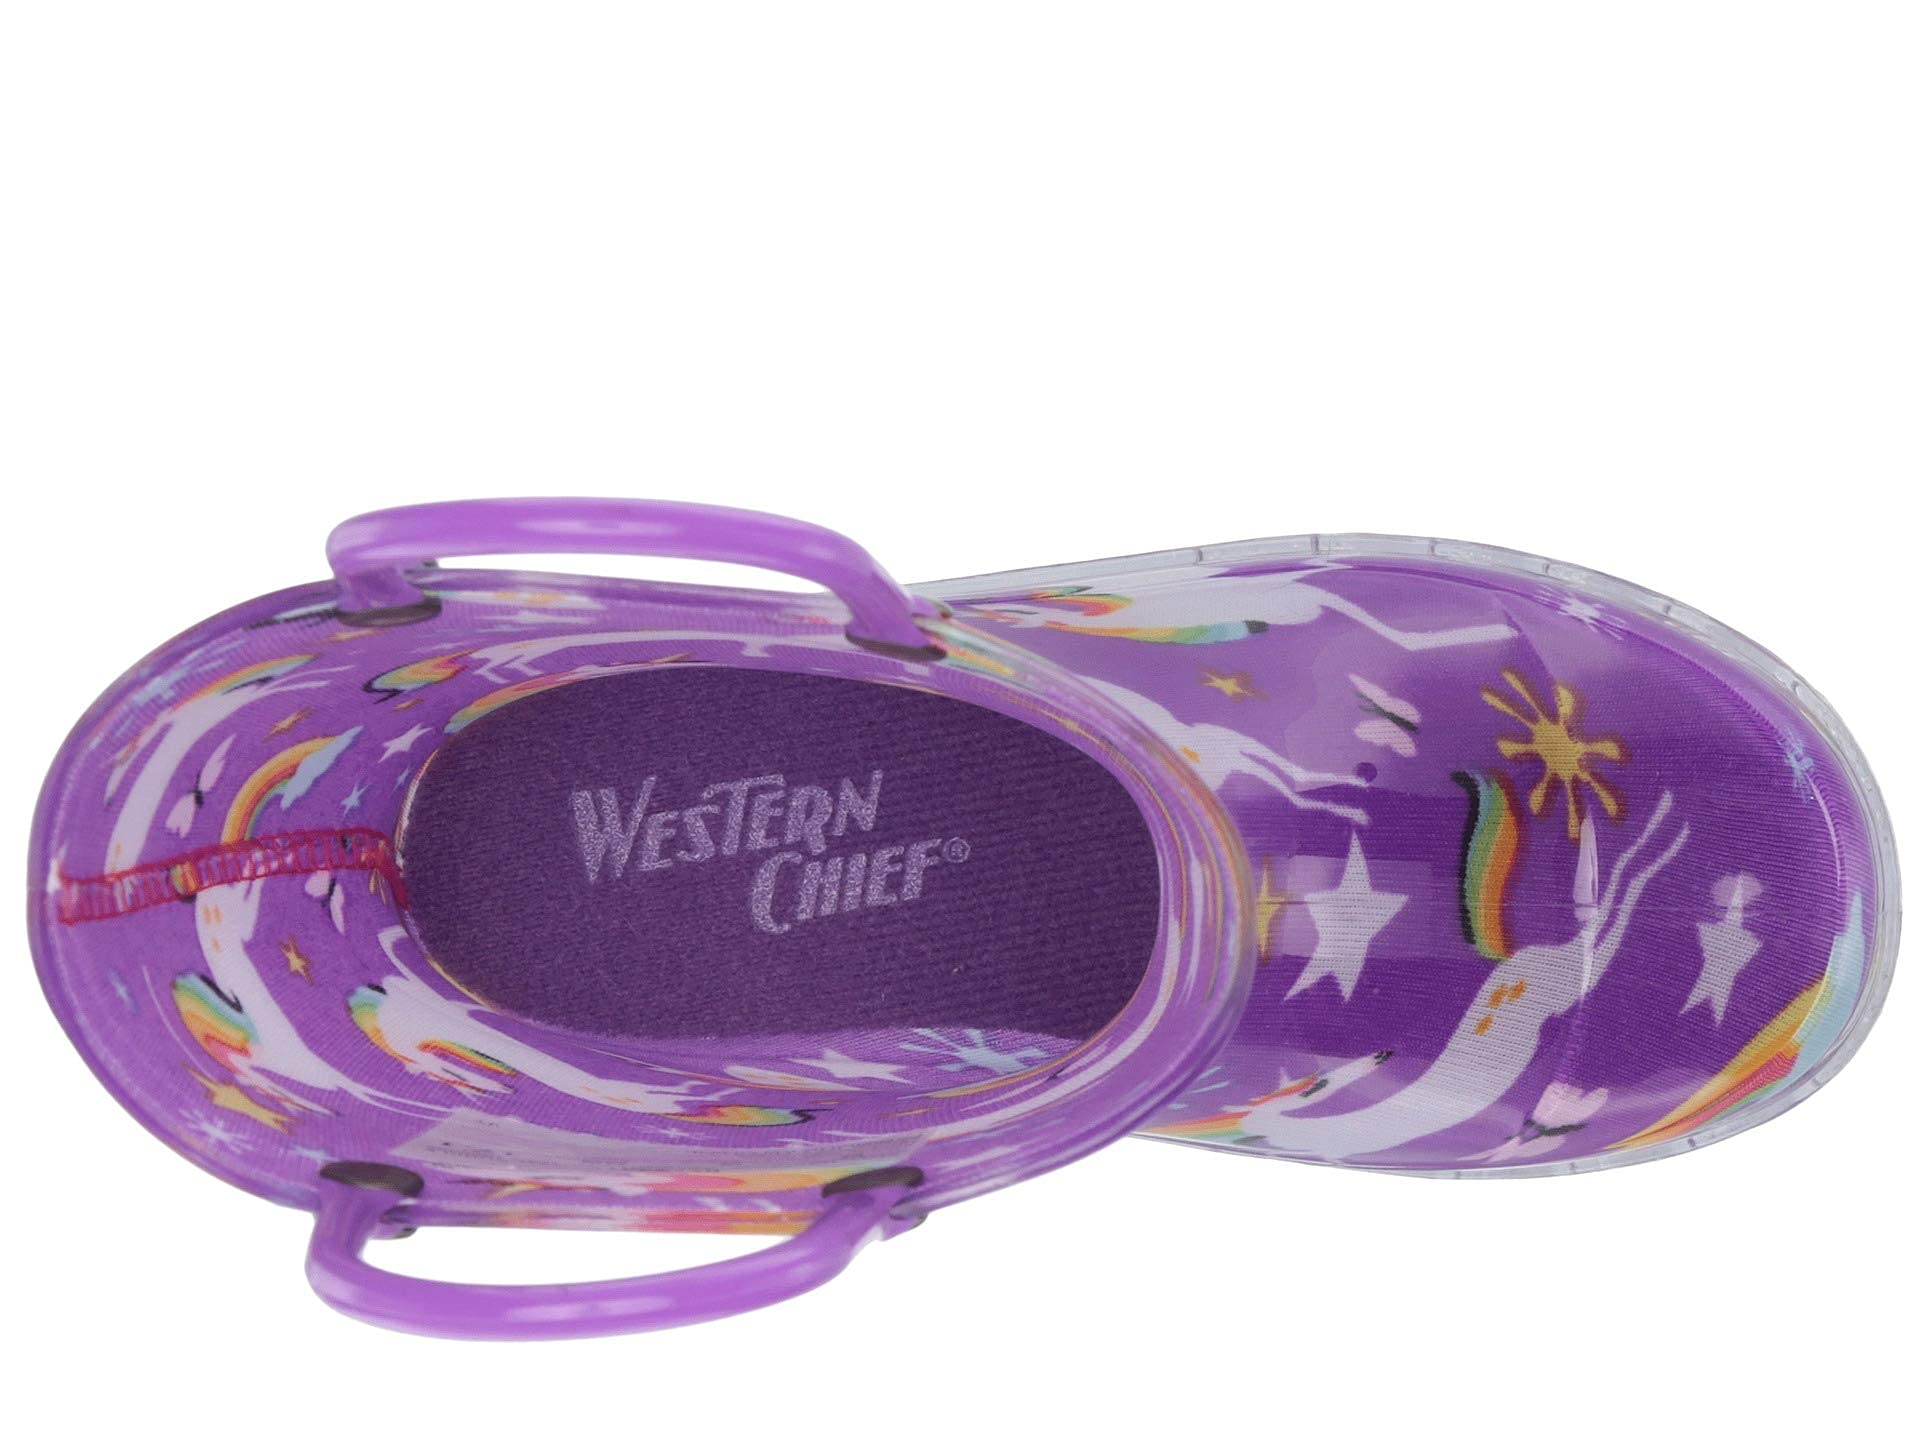 Western Chief Unisex-Child Light-up Waterproof Rain Boot